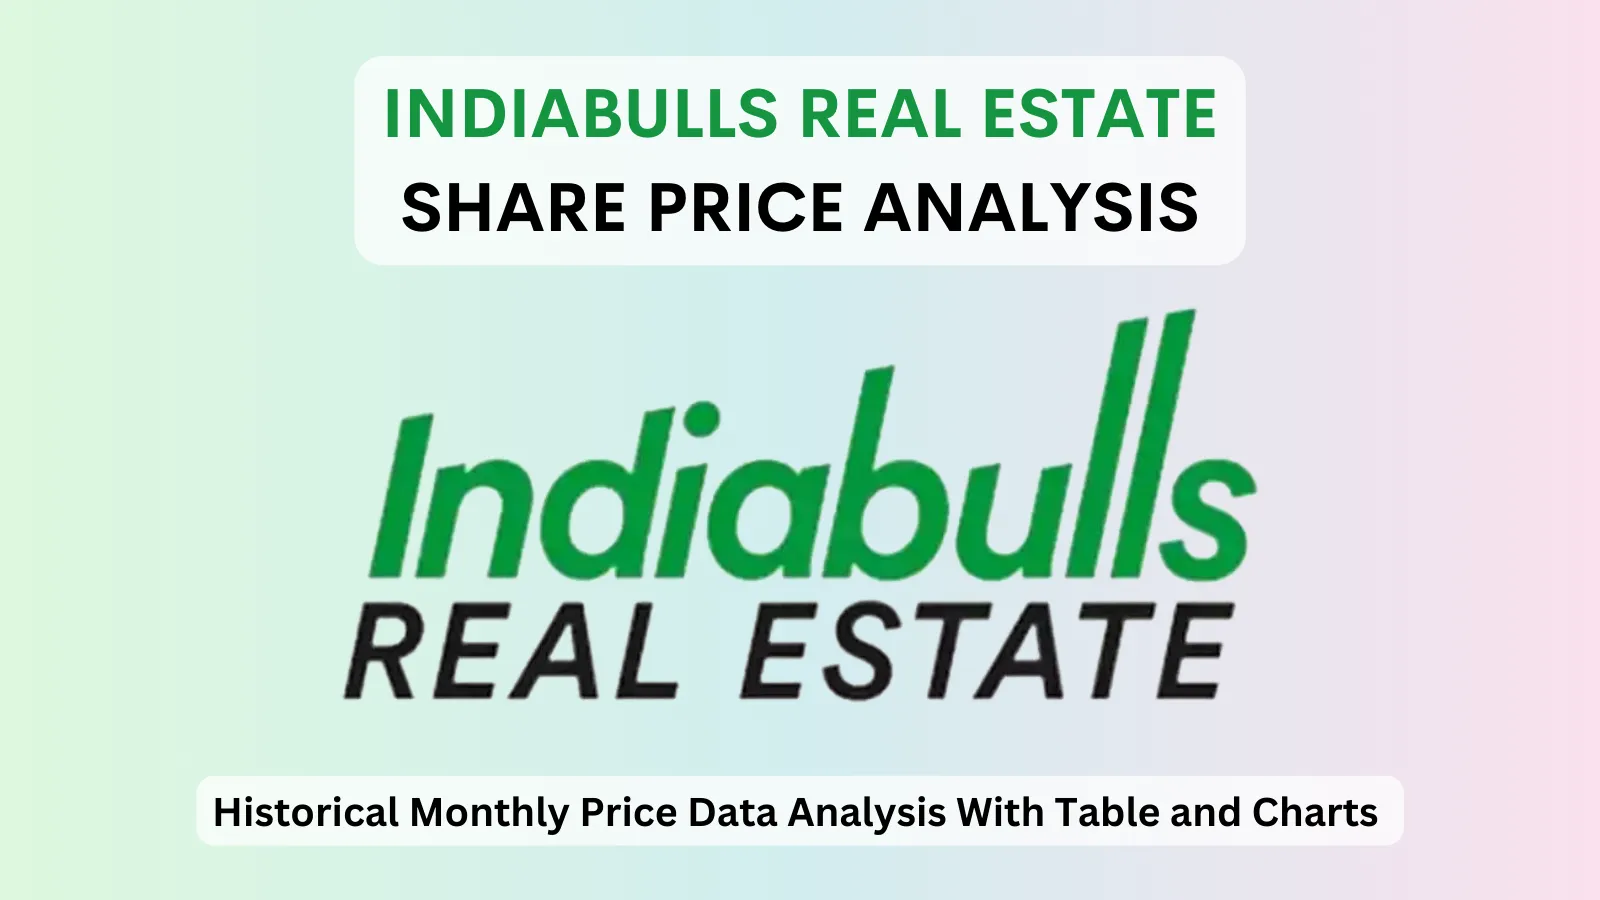 Indiabulls Real Estate share price analysis